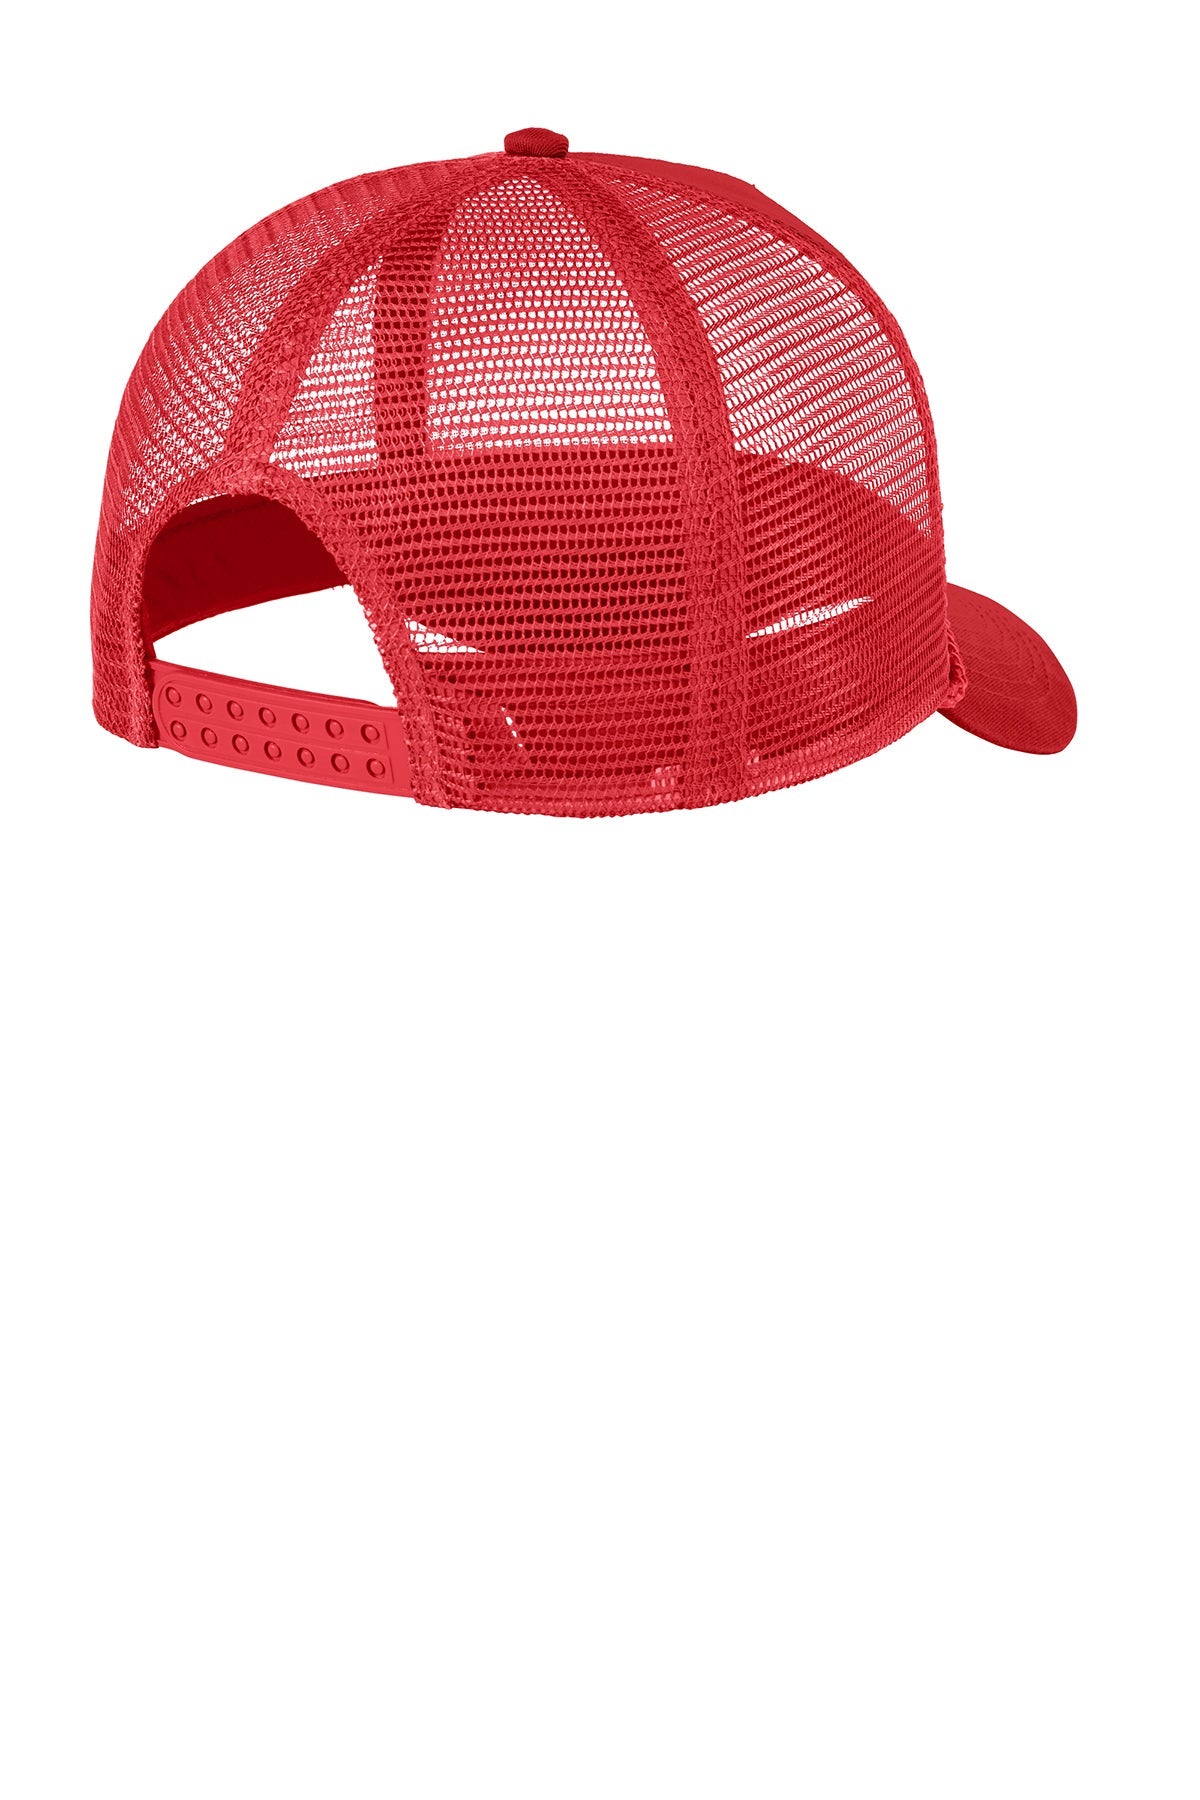 Port Authority 5-Panel Customized Snapback Caps, Red